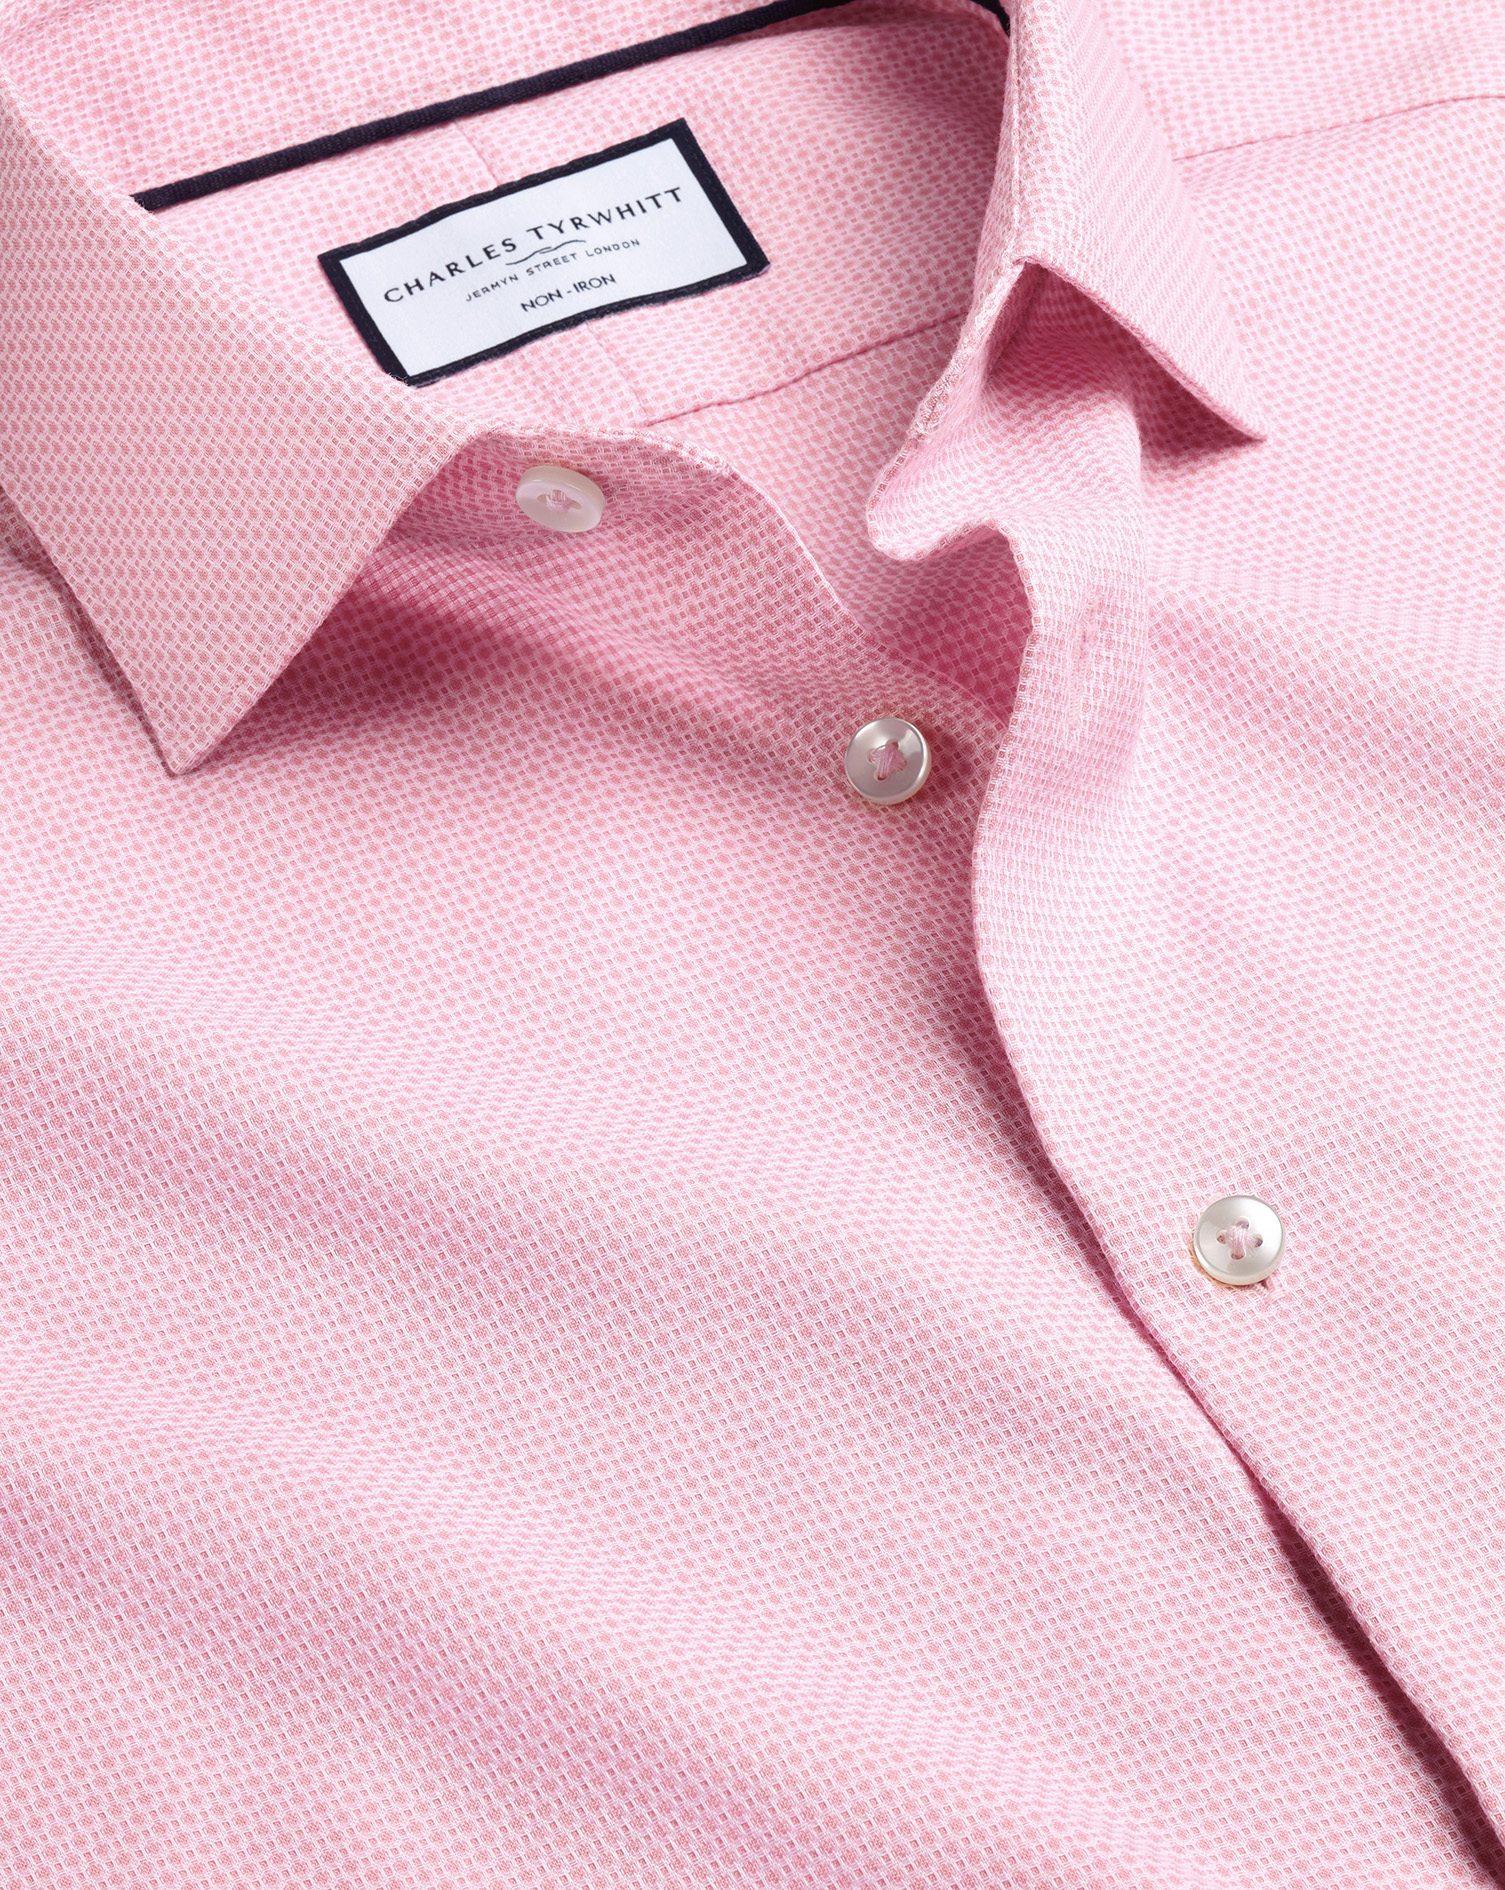 Men's Charles Tyrwhitt Non-Iron Stretch Texture Oval Dress Shirt - Pink Single Cuff Size 16.5/38 Cot